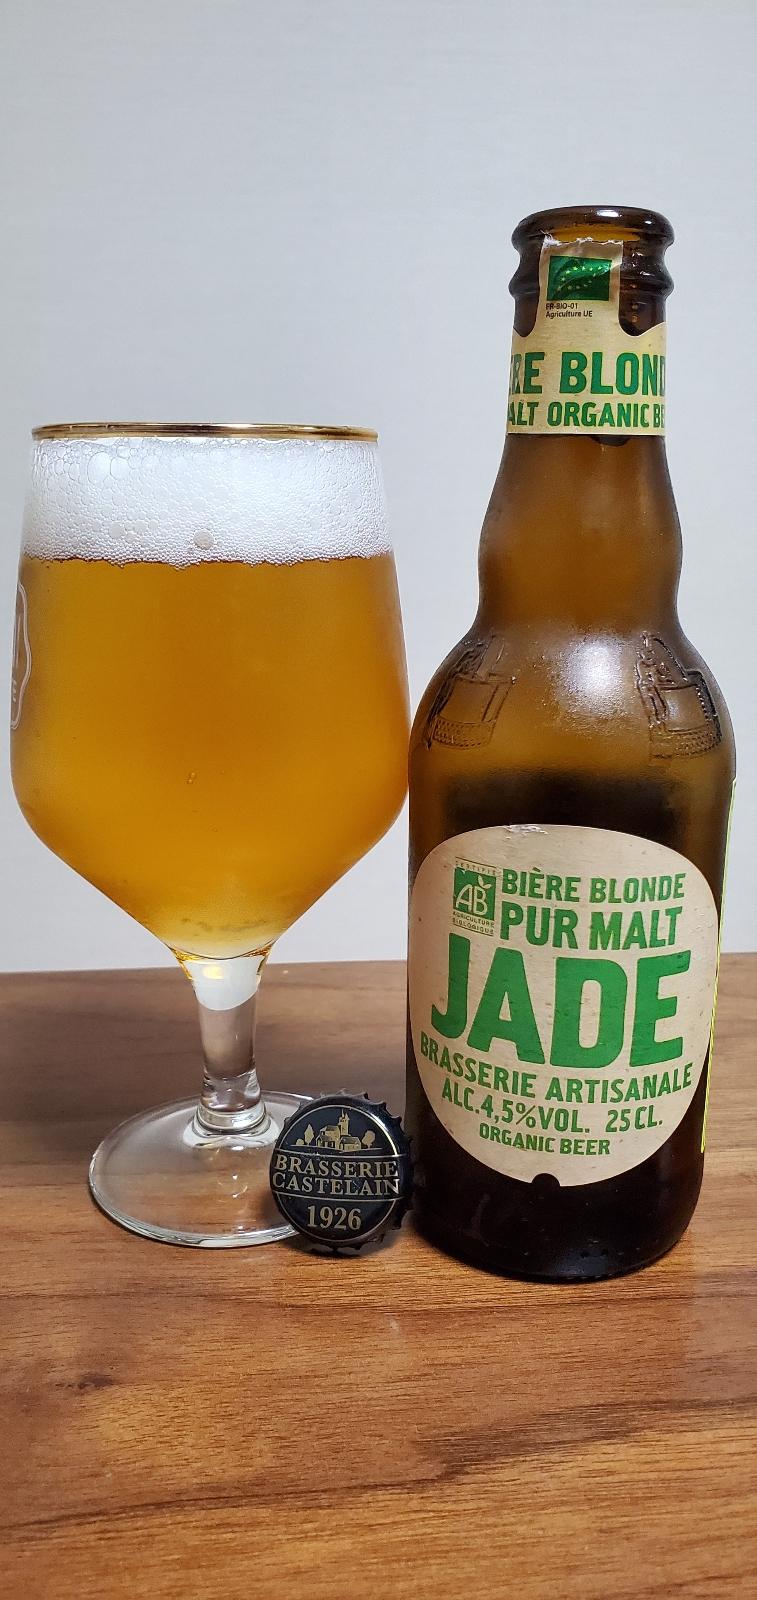 Jade Pur Malt Blonde